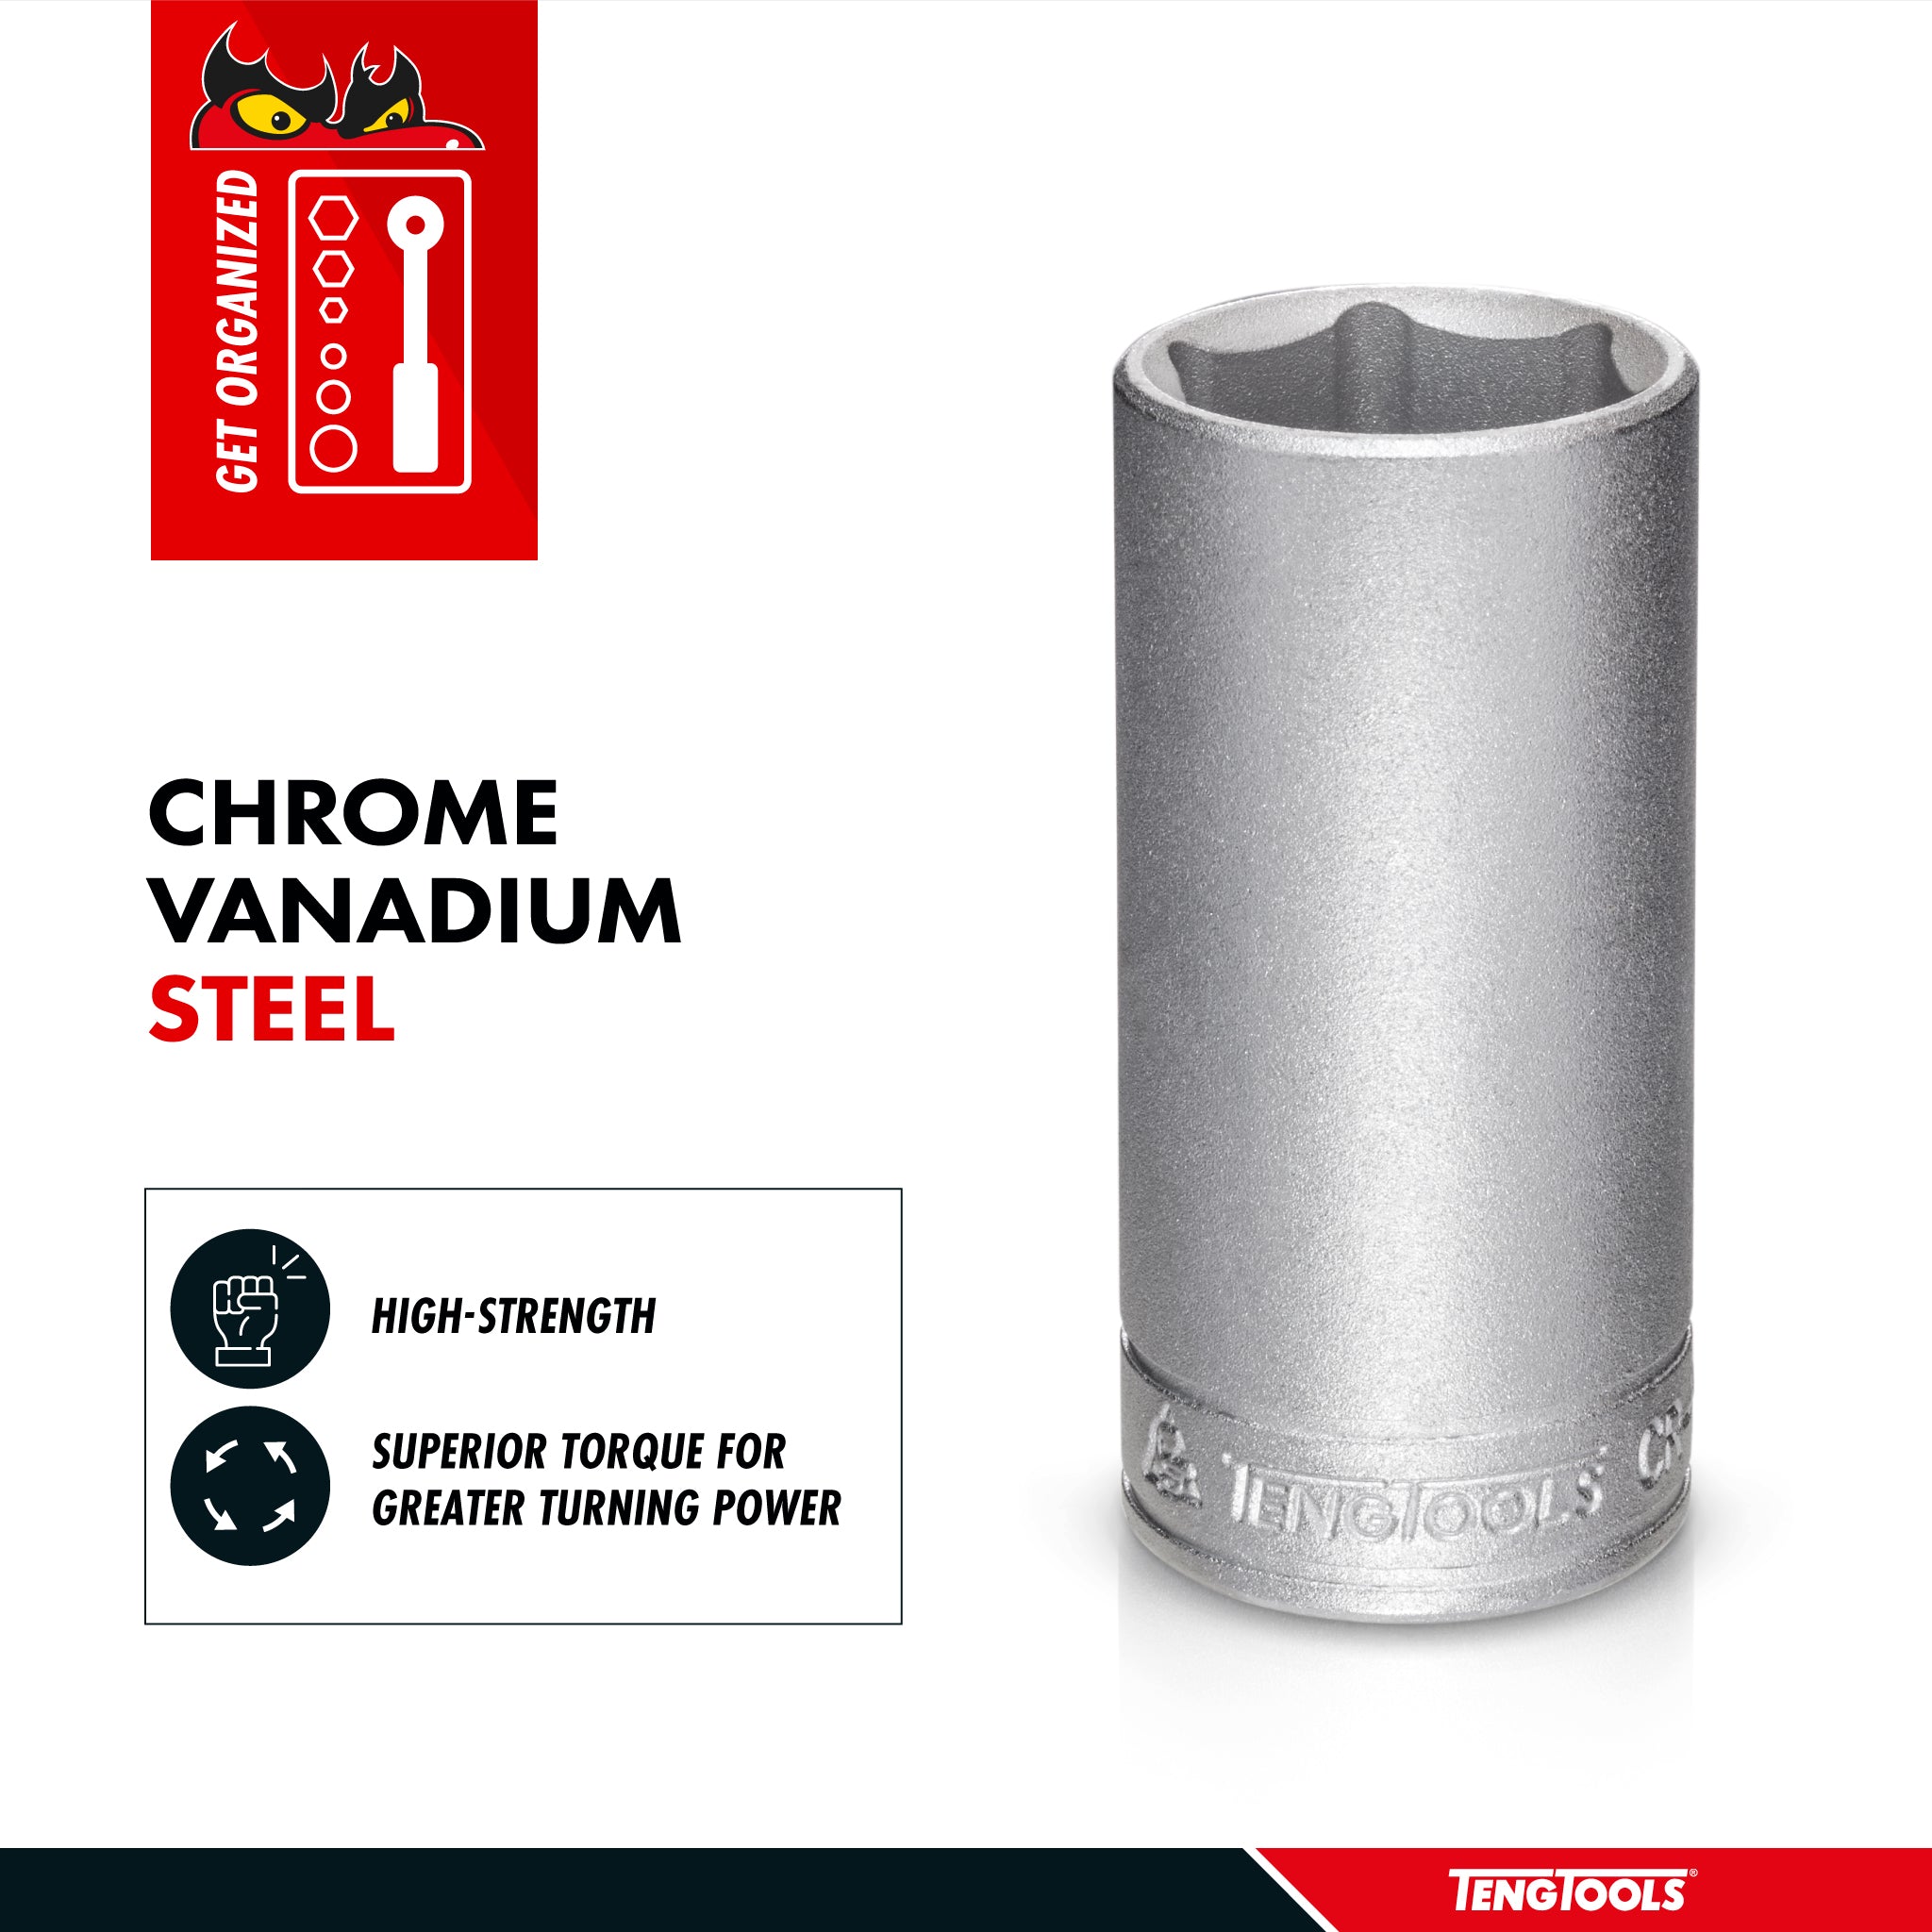 Teng Tools 1/4 Inch Drive 6 Point Metric Deep Chrome Vanadium Sockets - 10mm